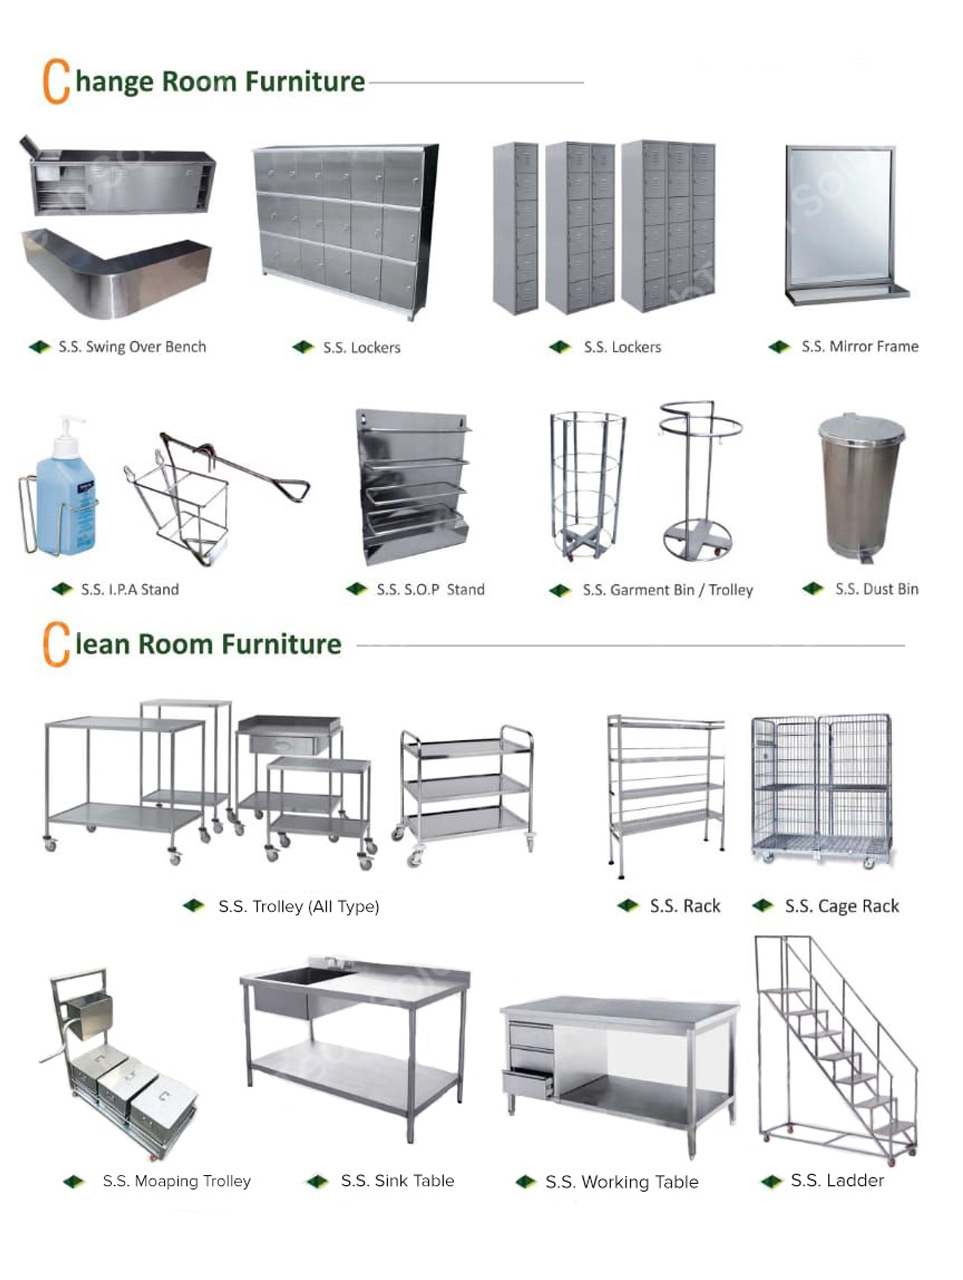 Clean Room & Change Room CRF Supplier